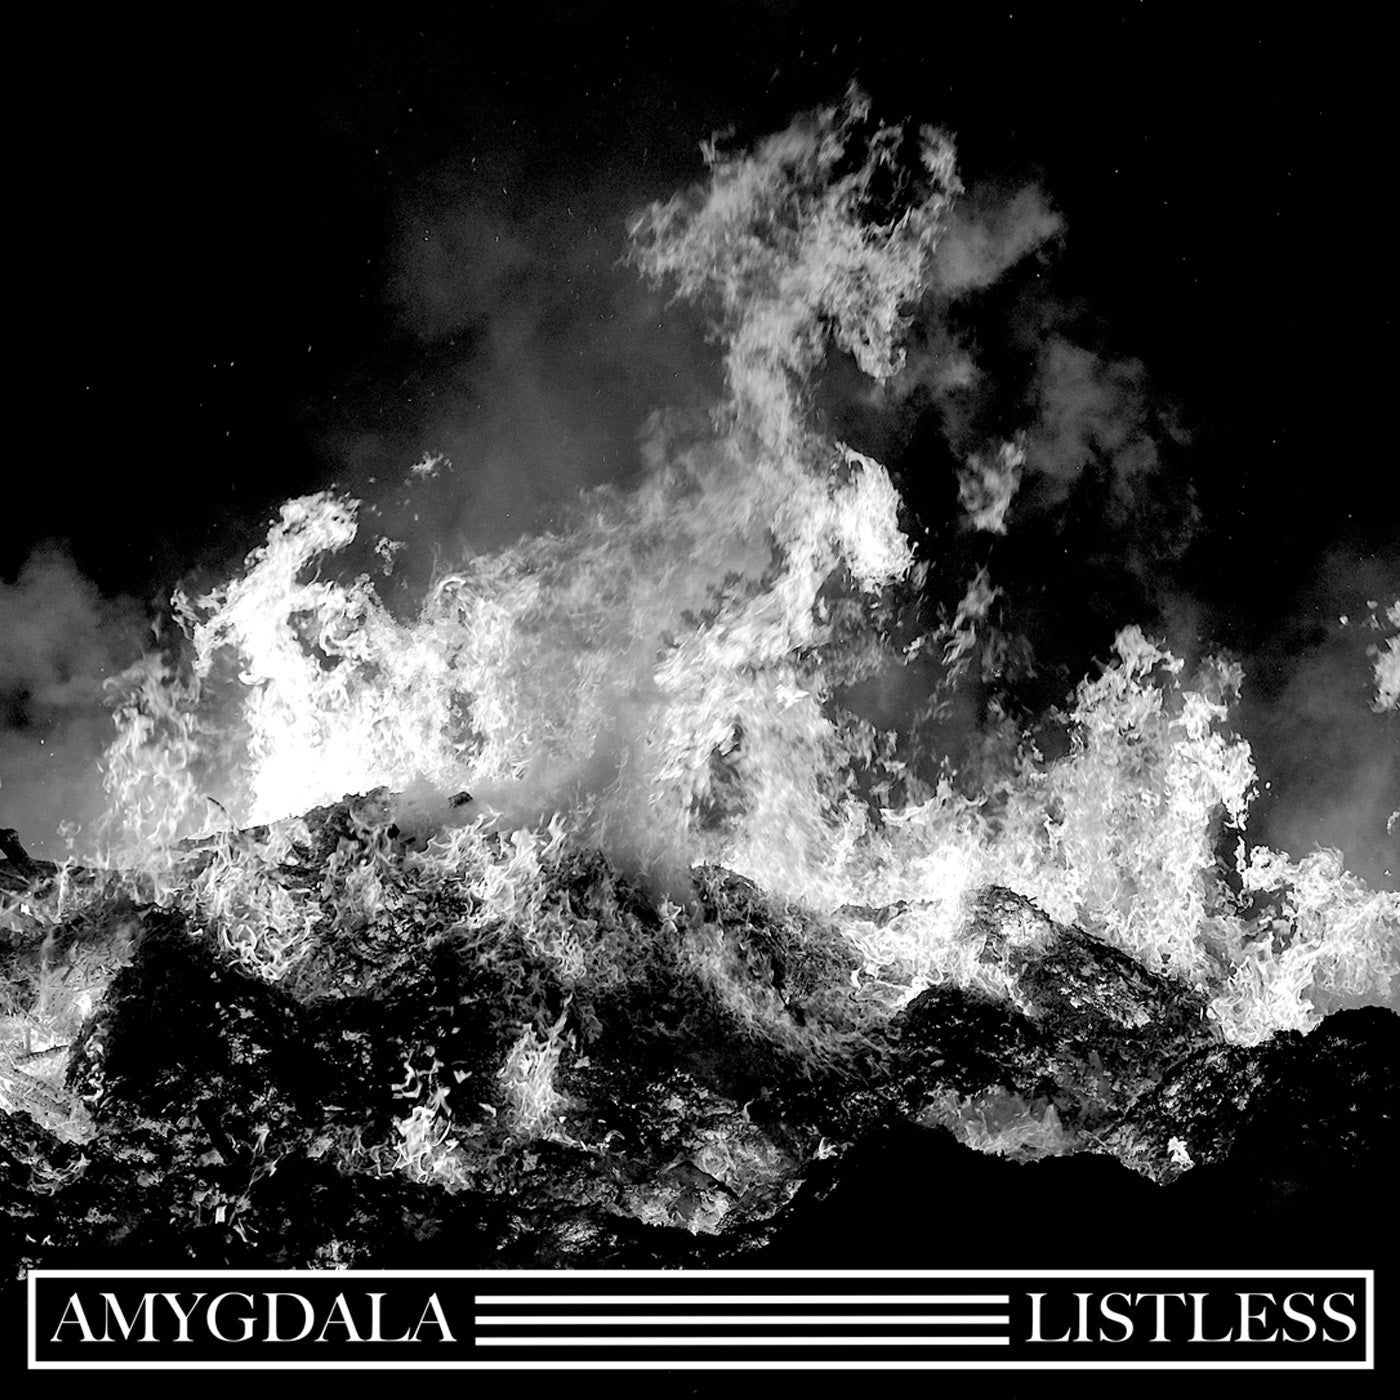 Amygdala/Listless "Split" LP